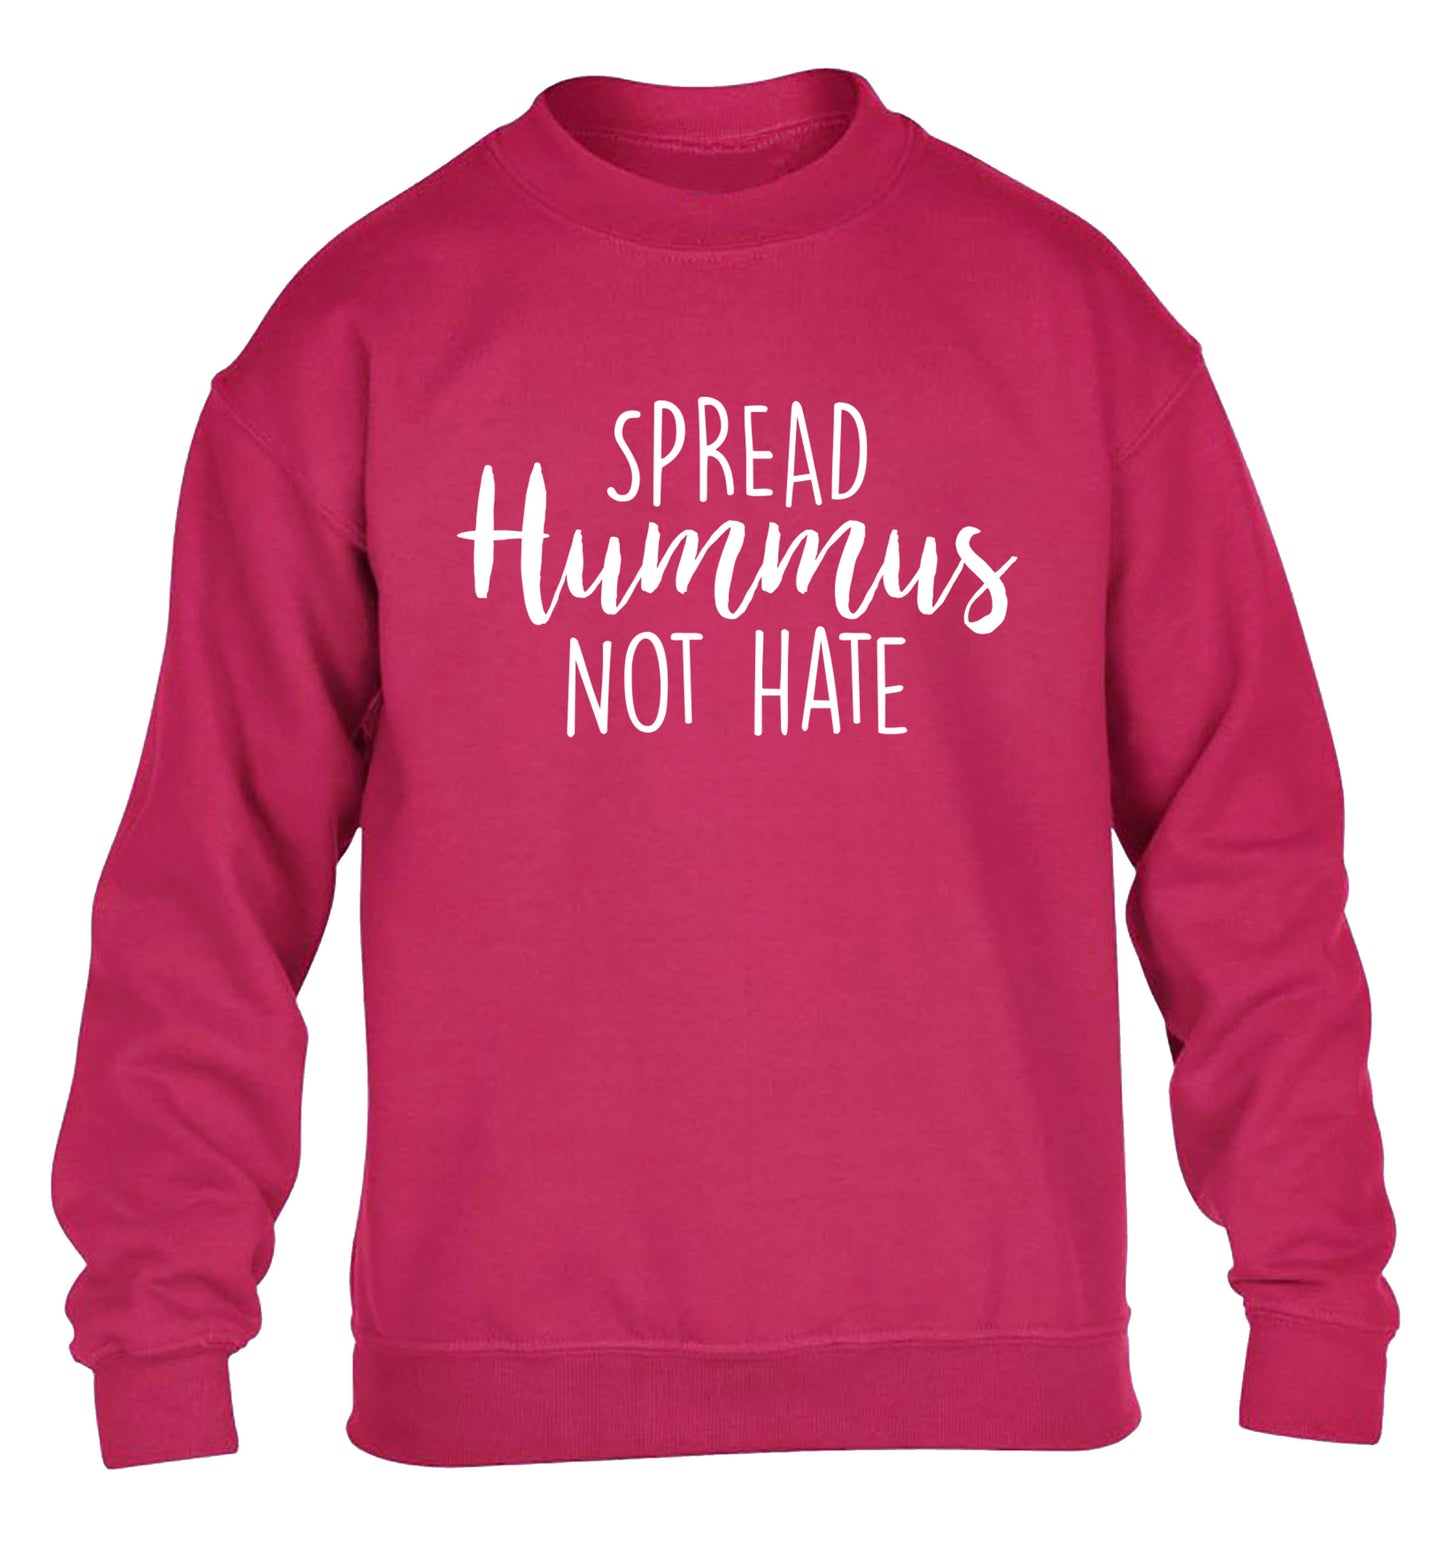 Spread hummus not hate script text children's pink sweater 12-14 Years